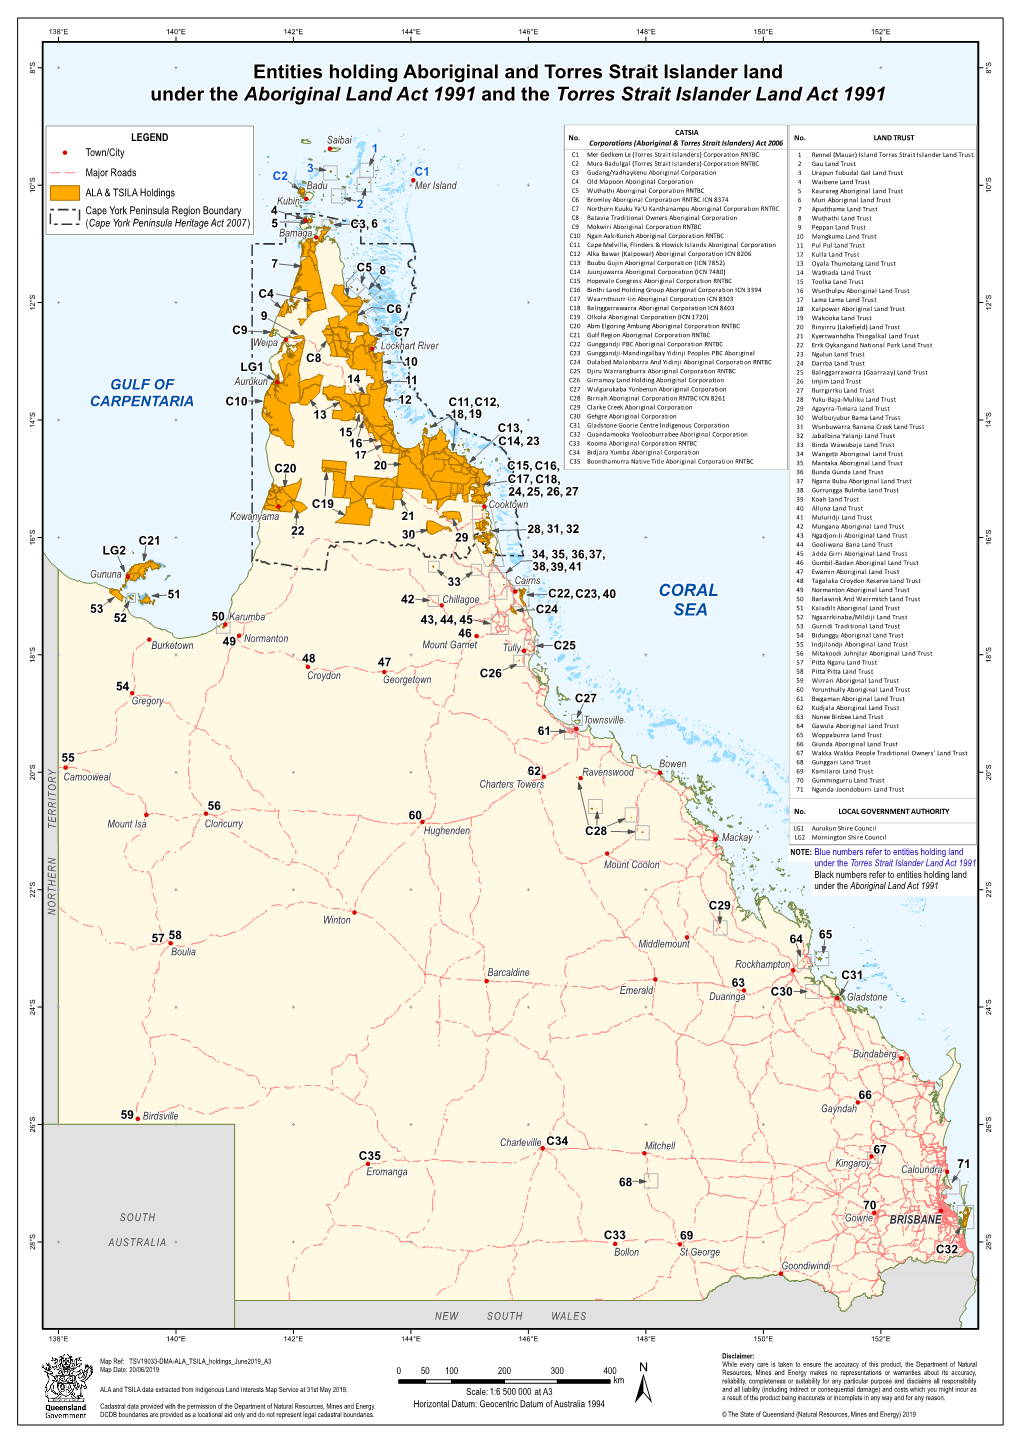 Under the Aboriginal Land Act 1991 and the Torres Strait Islander Land Act 1991